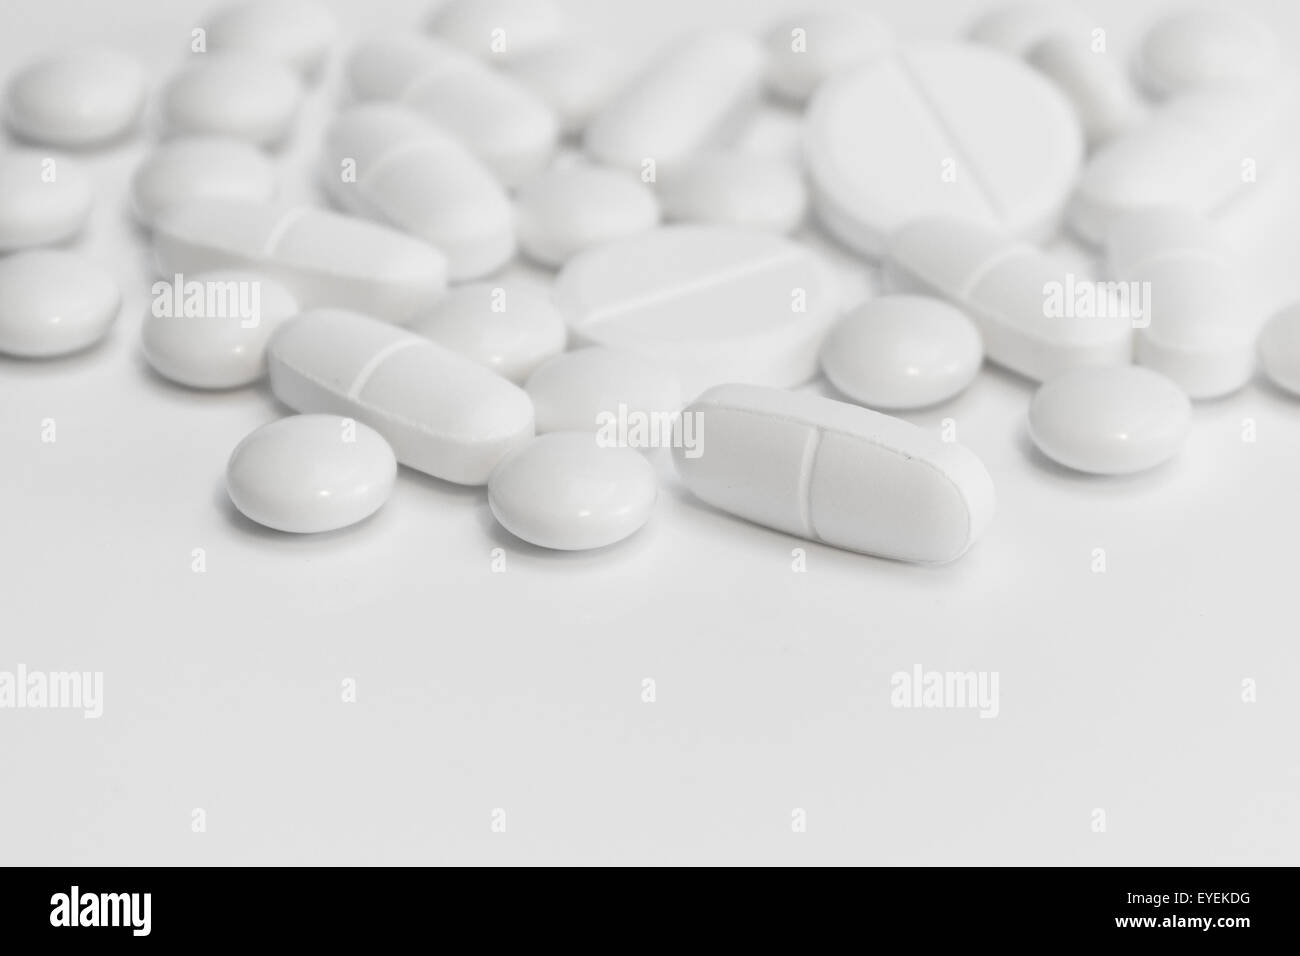 many white pills / tablets on white background Stock Photo